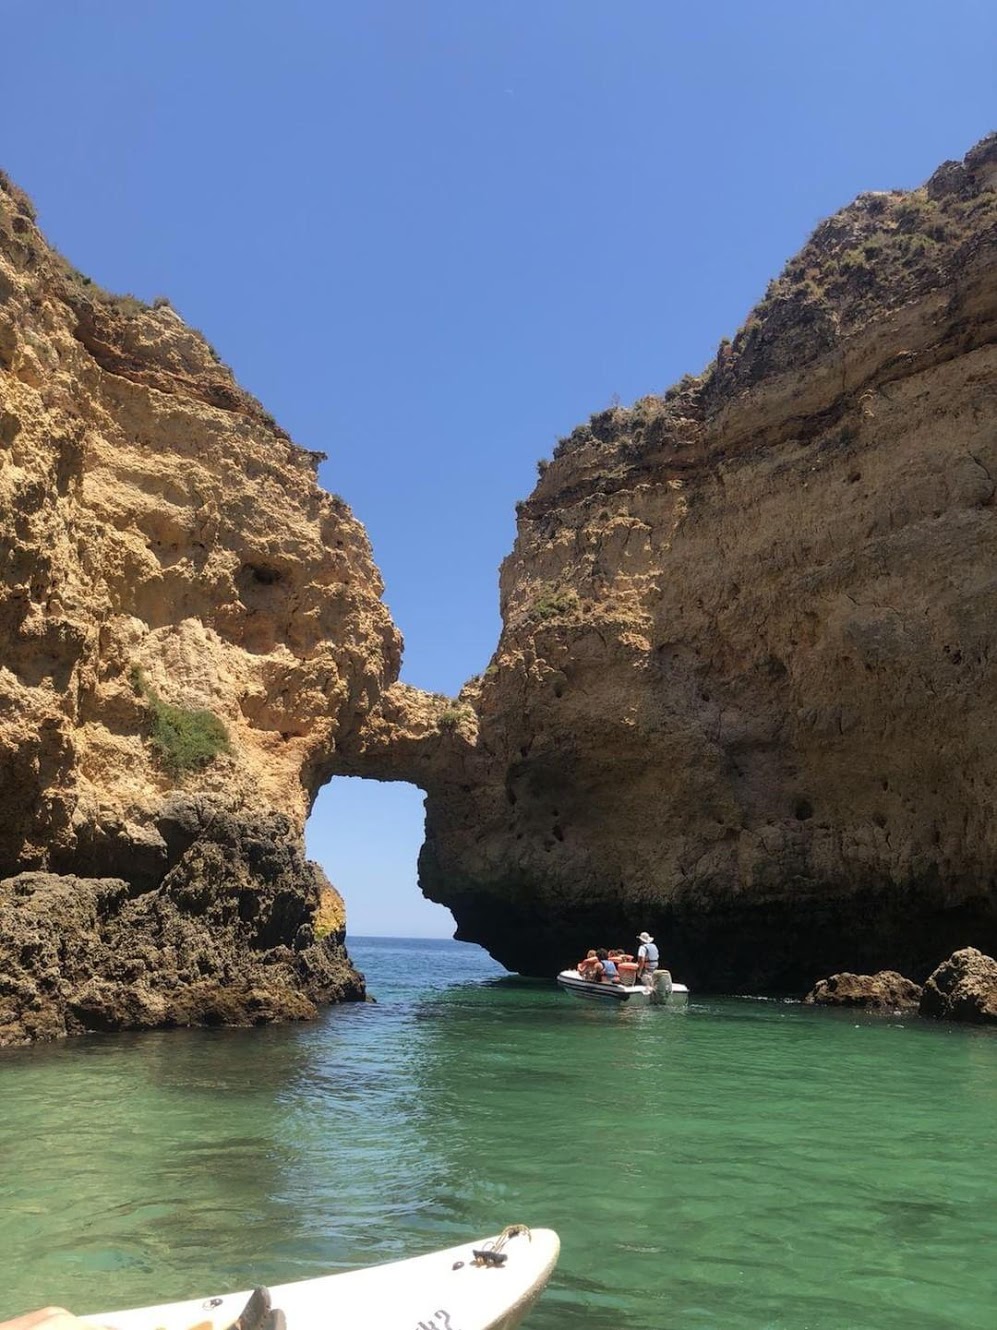 IMG 20180706 125120 517 - The Algarve Travel Guide